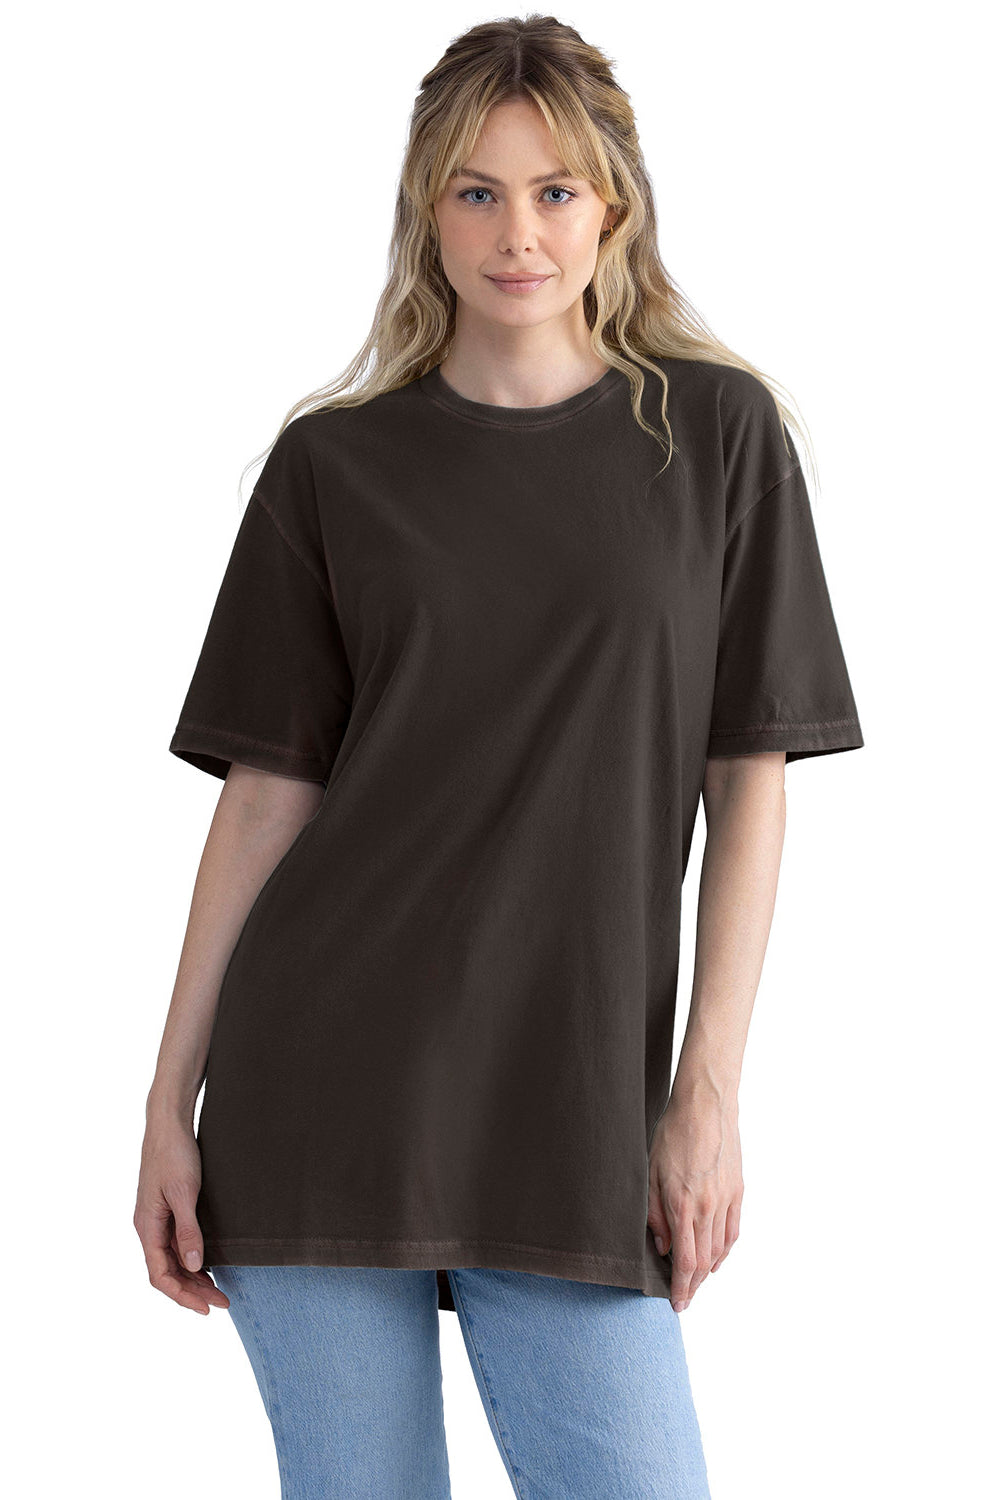 Next Level 3600SW Mens Soft Wash Short Sleeve Crewneck T-Shirt Graphite Black Front